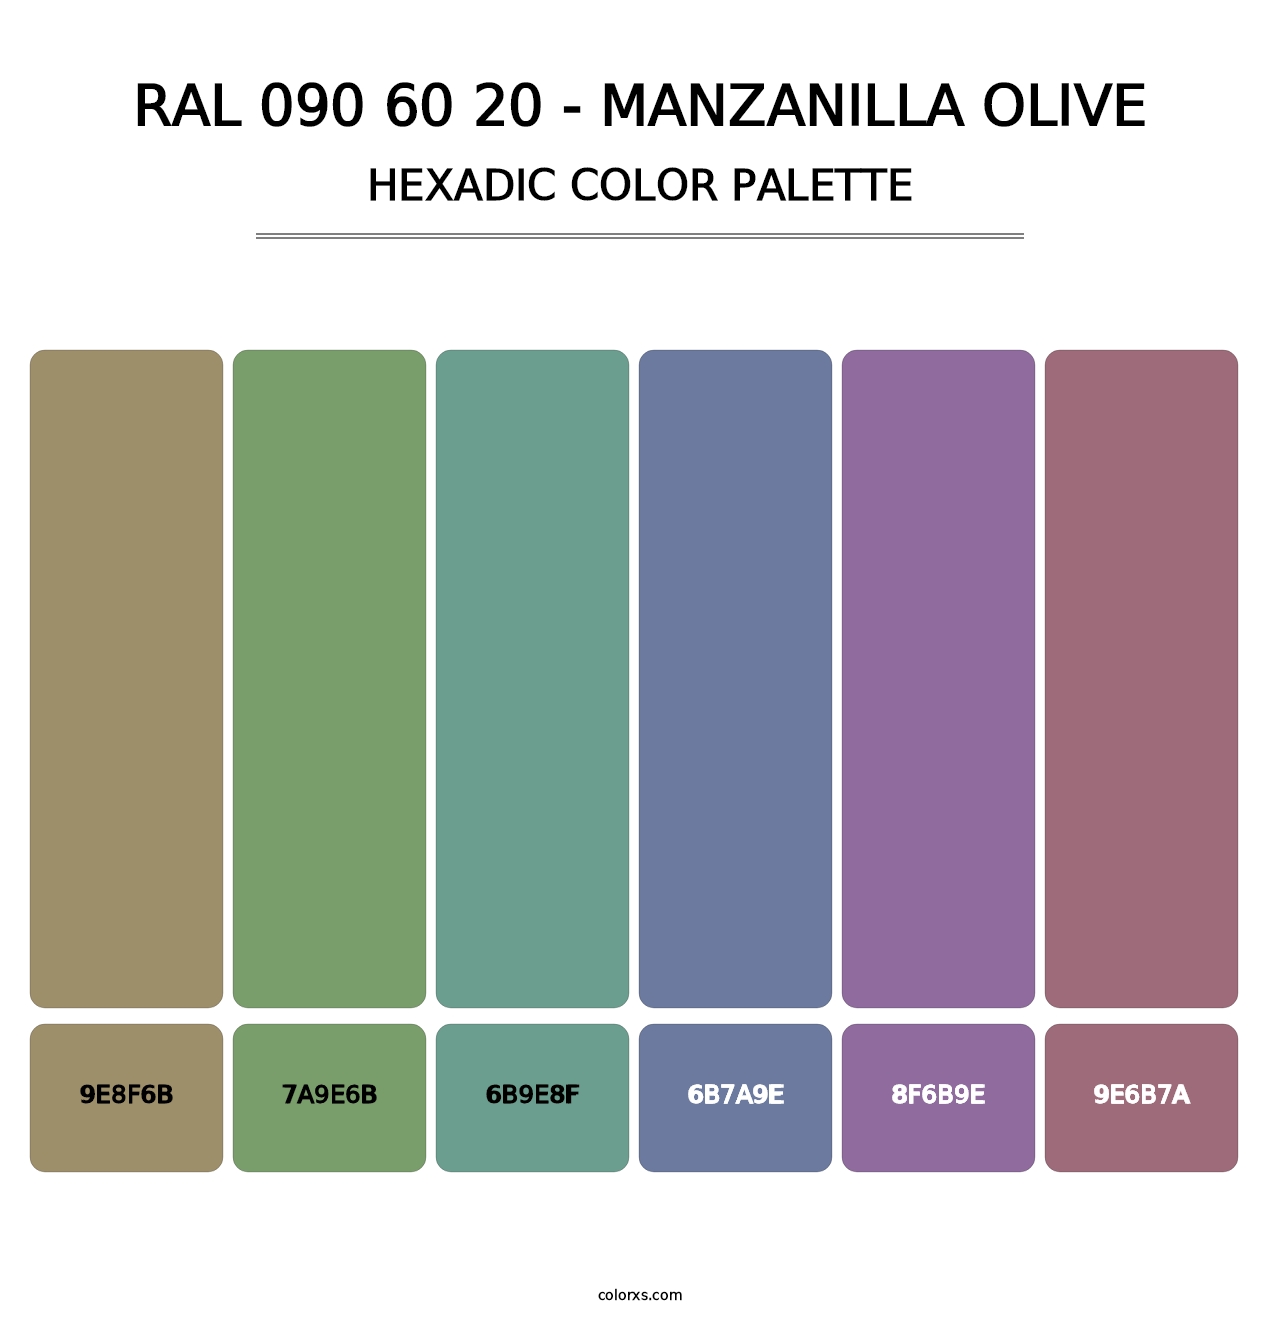 RAL 090 60 20 - Manzanilla Olive - Hexadic Color Palette